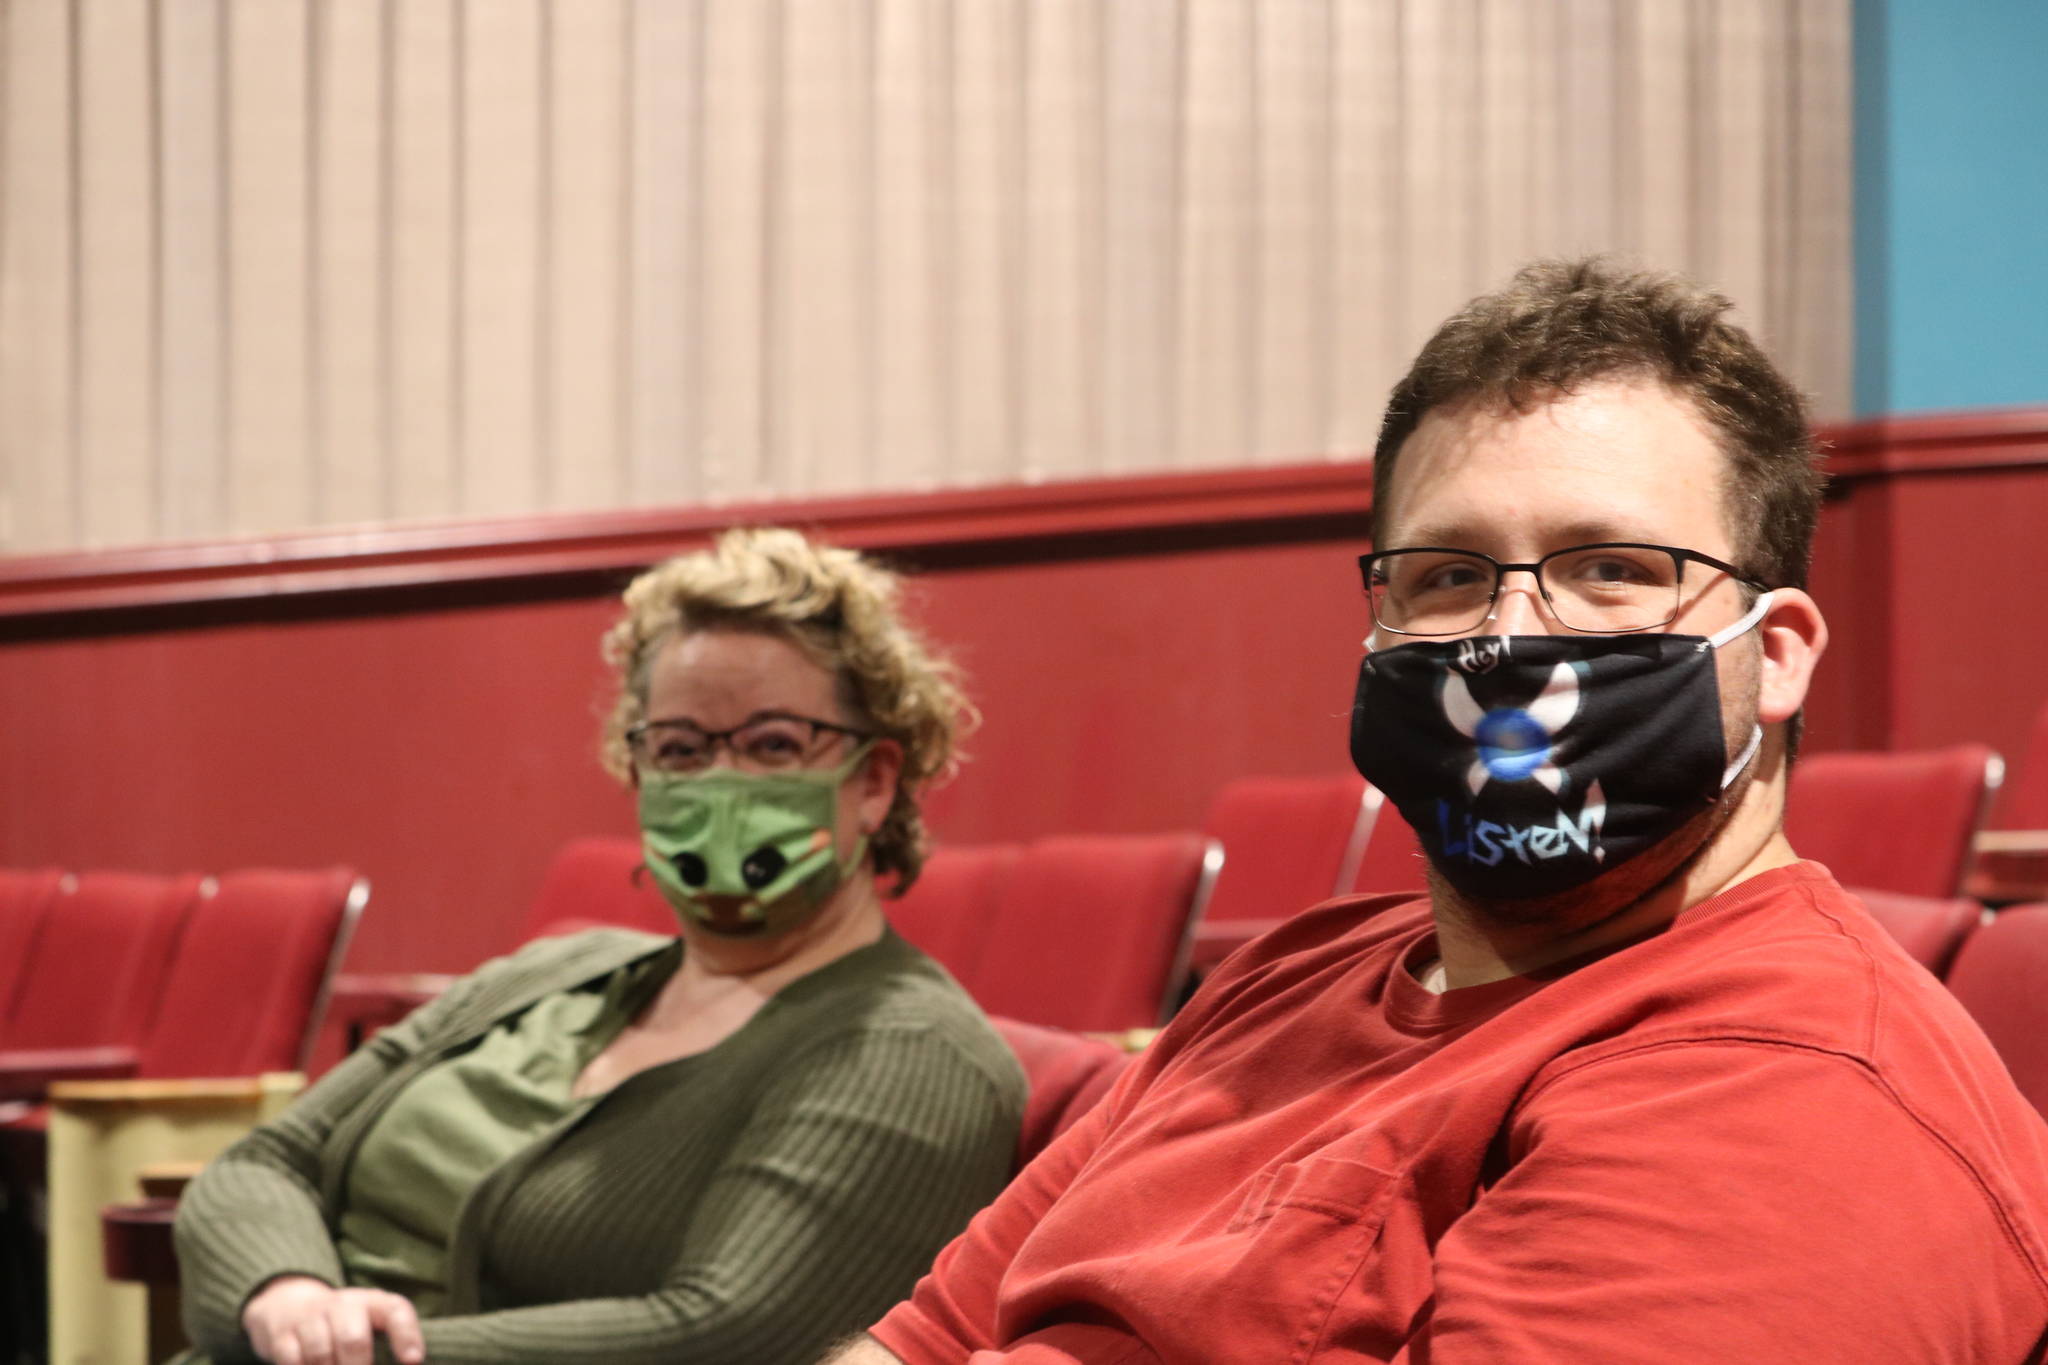 Beth Burrows, left, and Skyler Possert sit inside the North Bend Theatre. Aaron Kunkler/staff photo